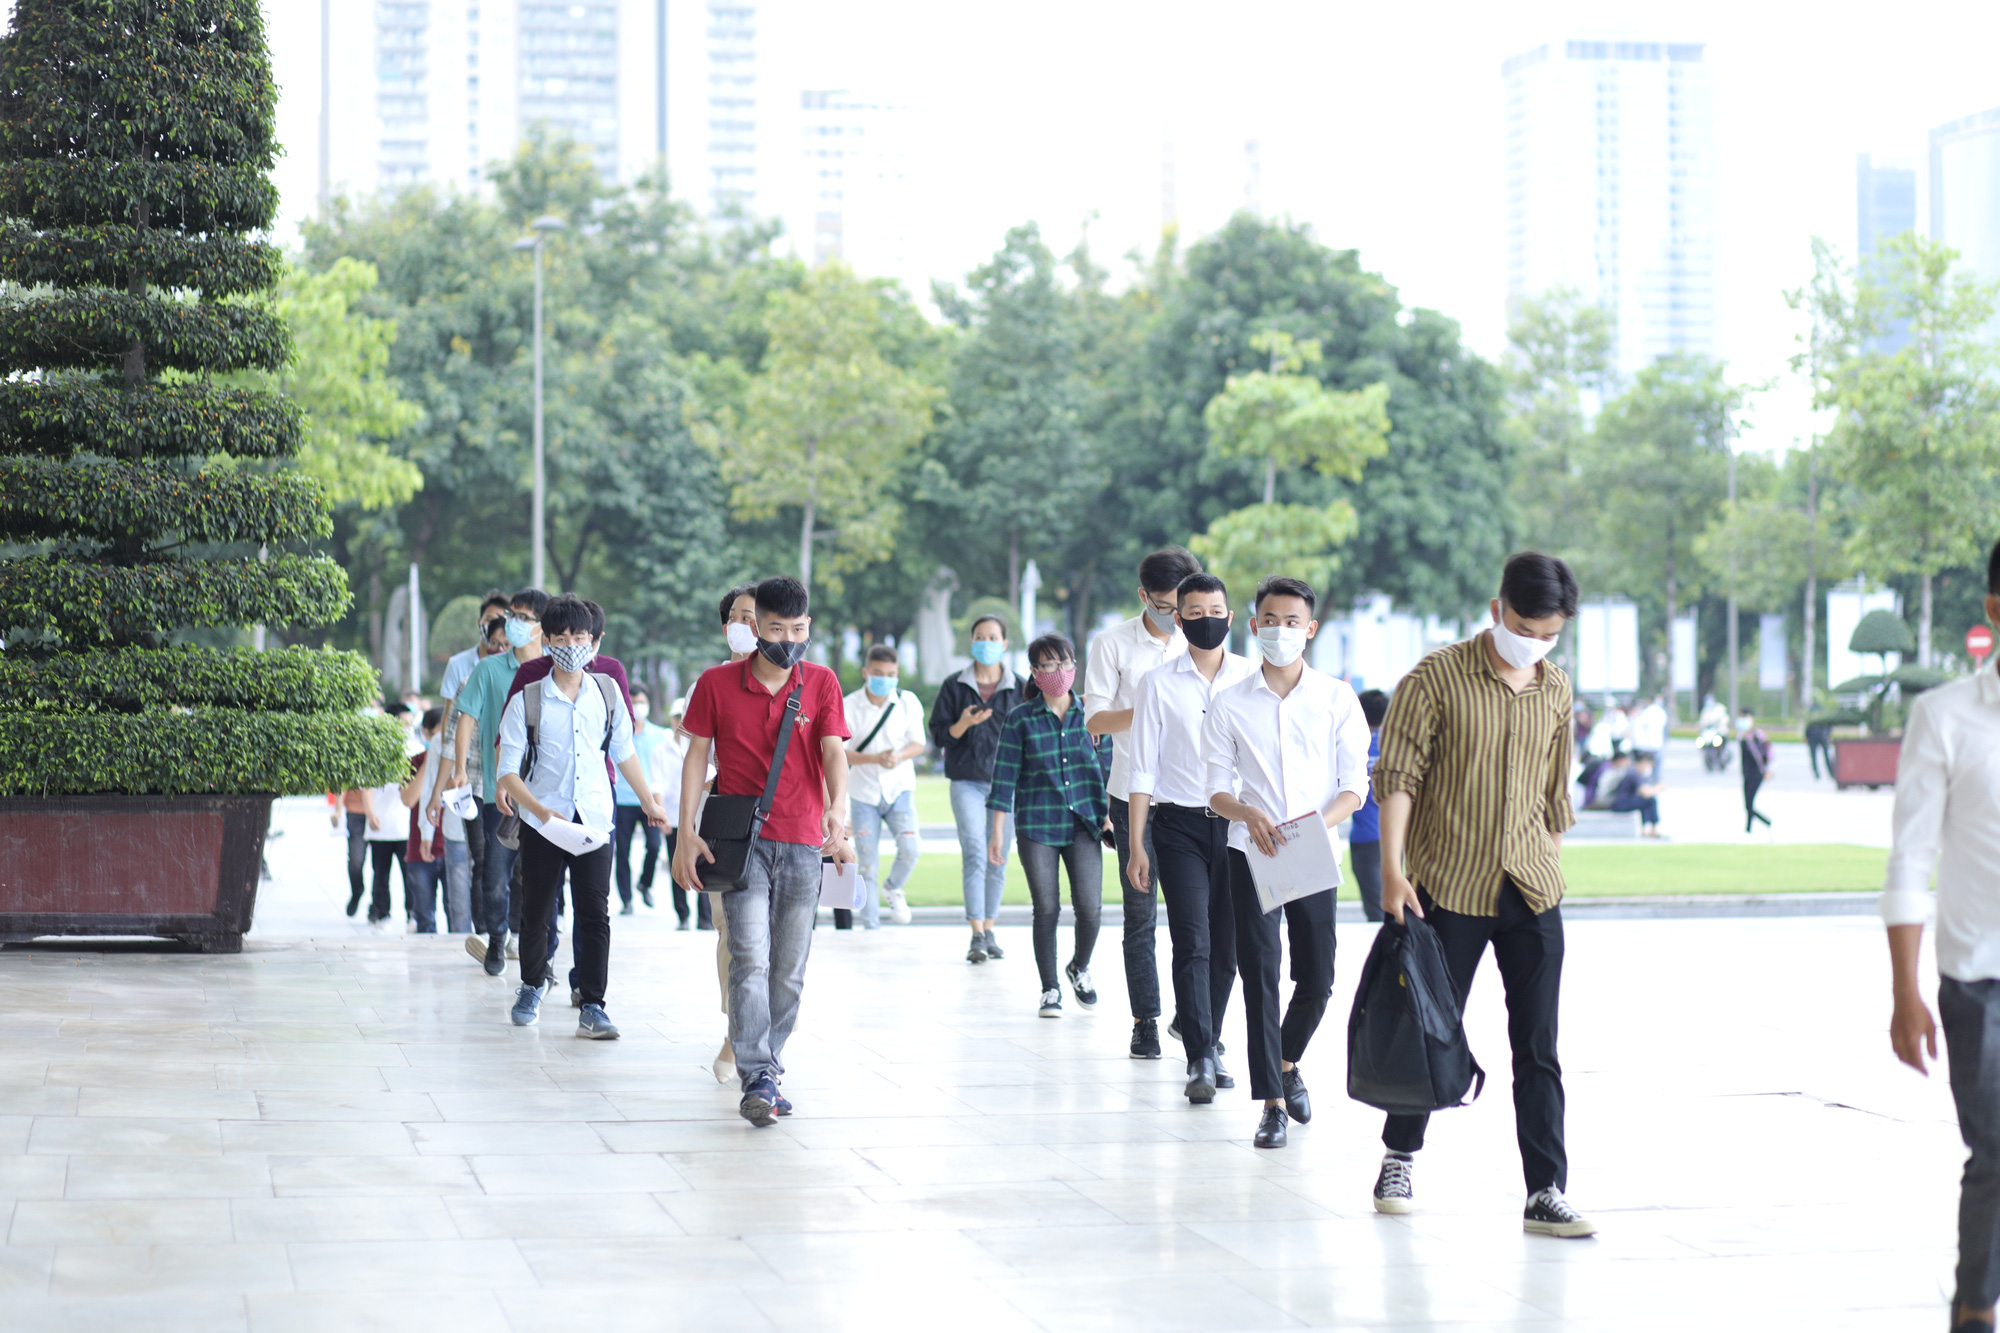 Samsung Vietnam launches large-scale recruitment drive in Hanoi